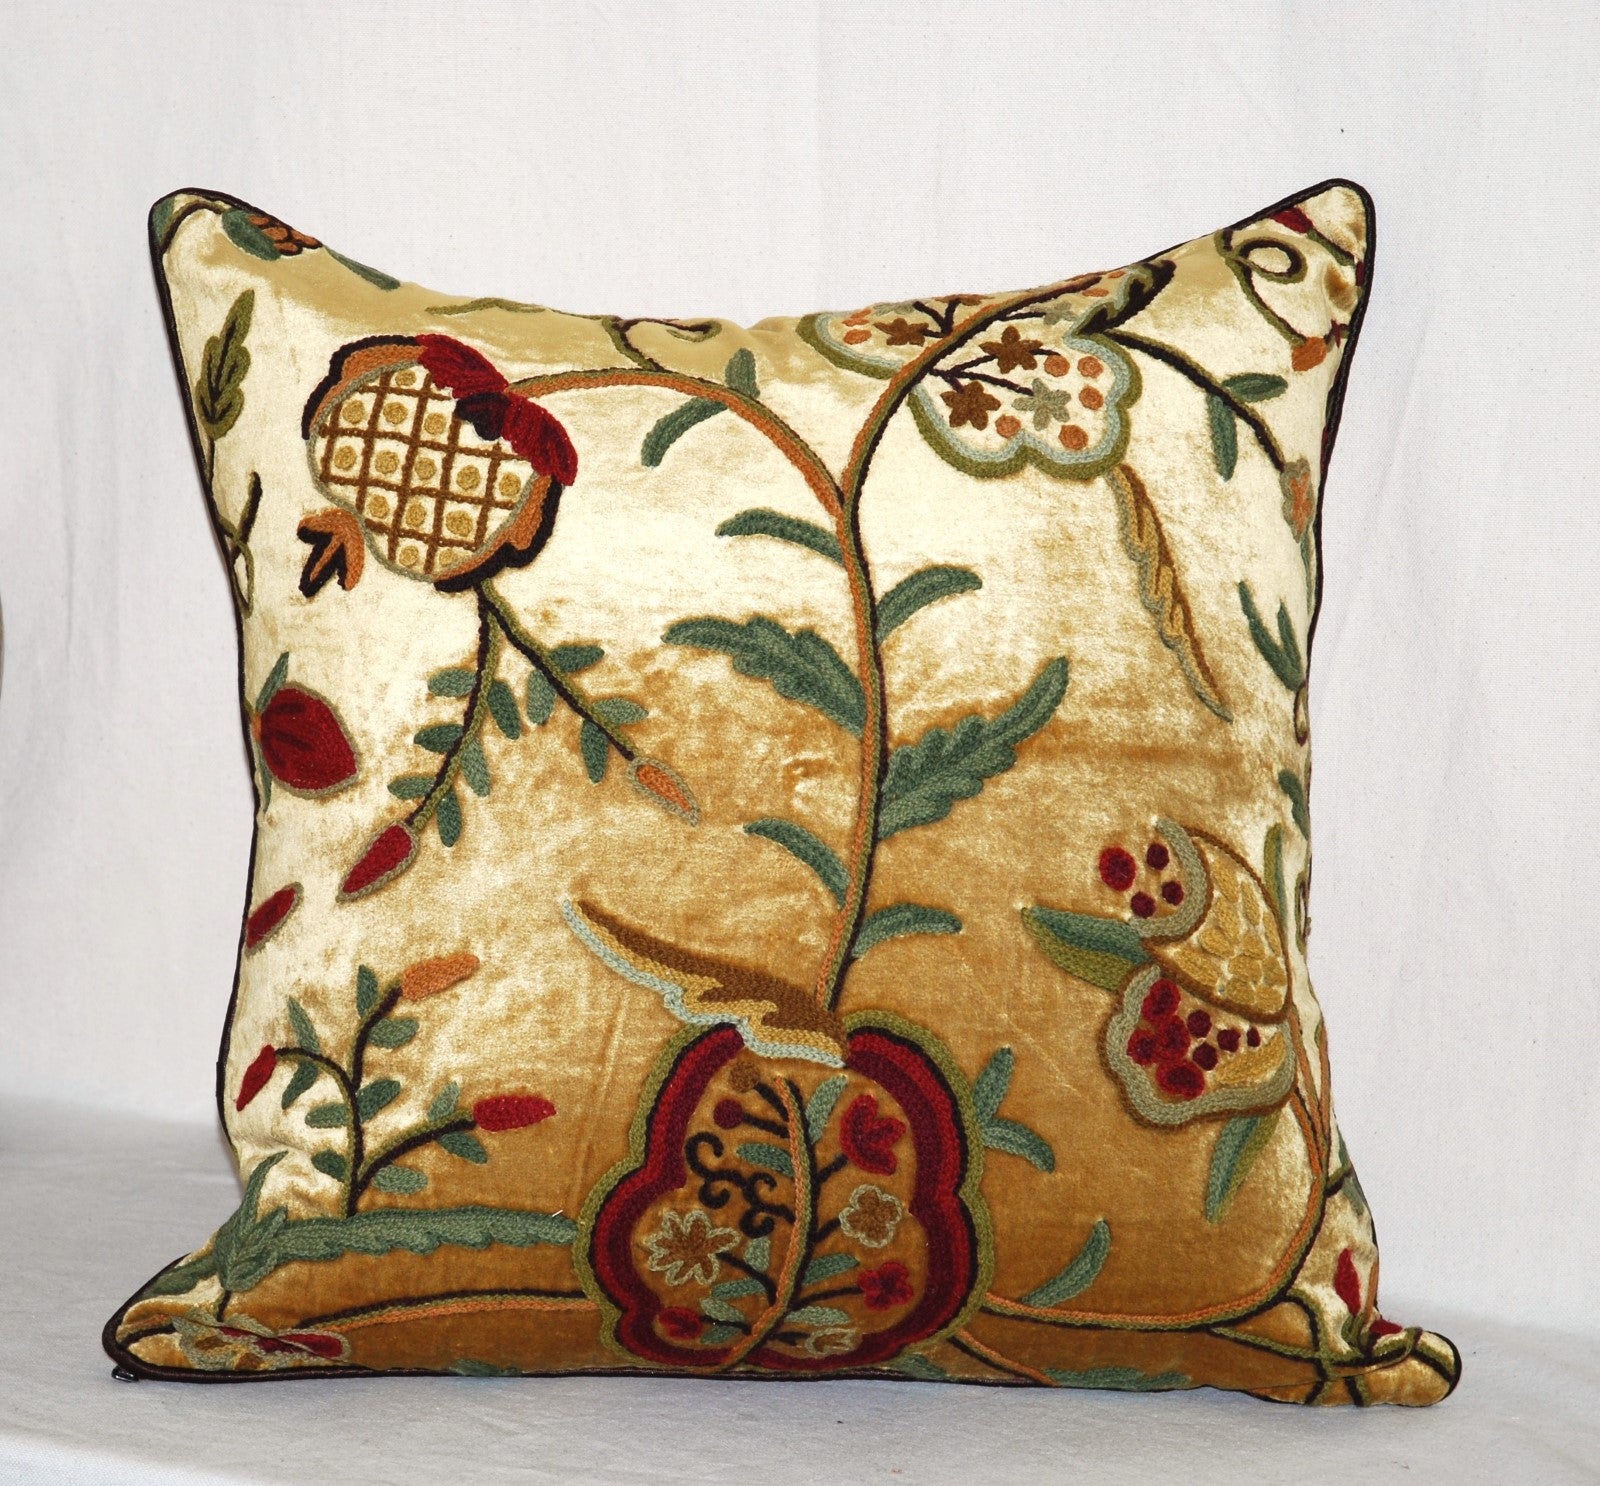 Crewel Chenille Velvet Throw Pillow Cushion Cover, Multicolor on Gold #CW526